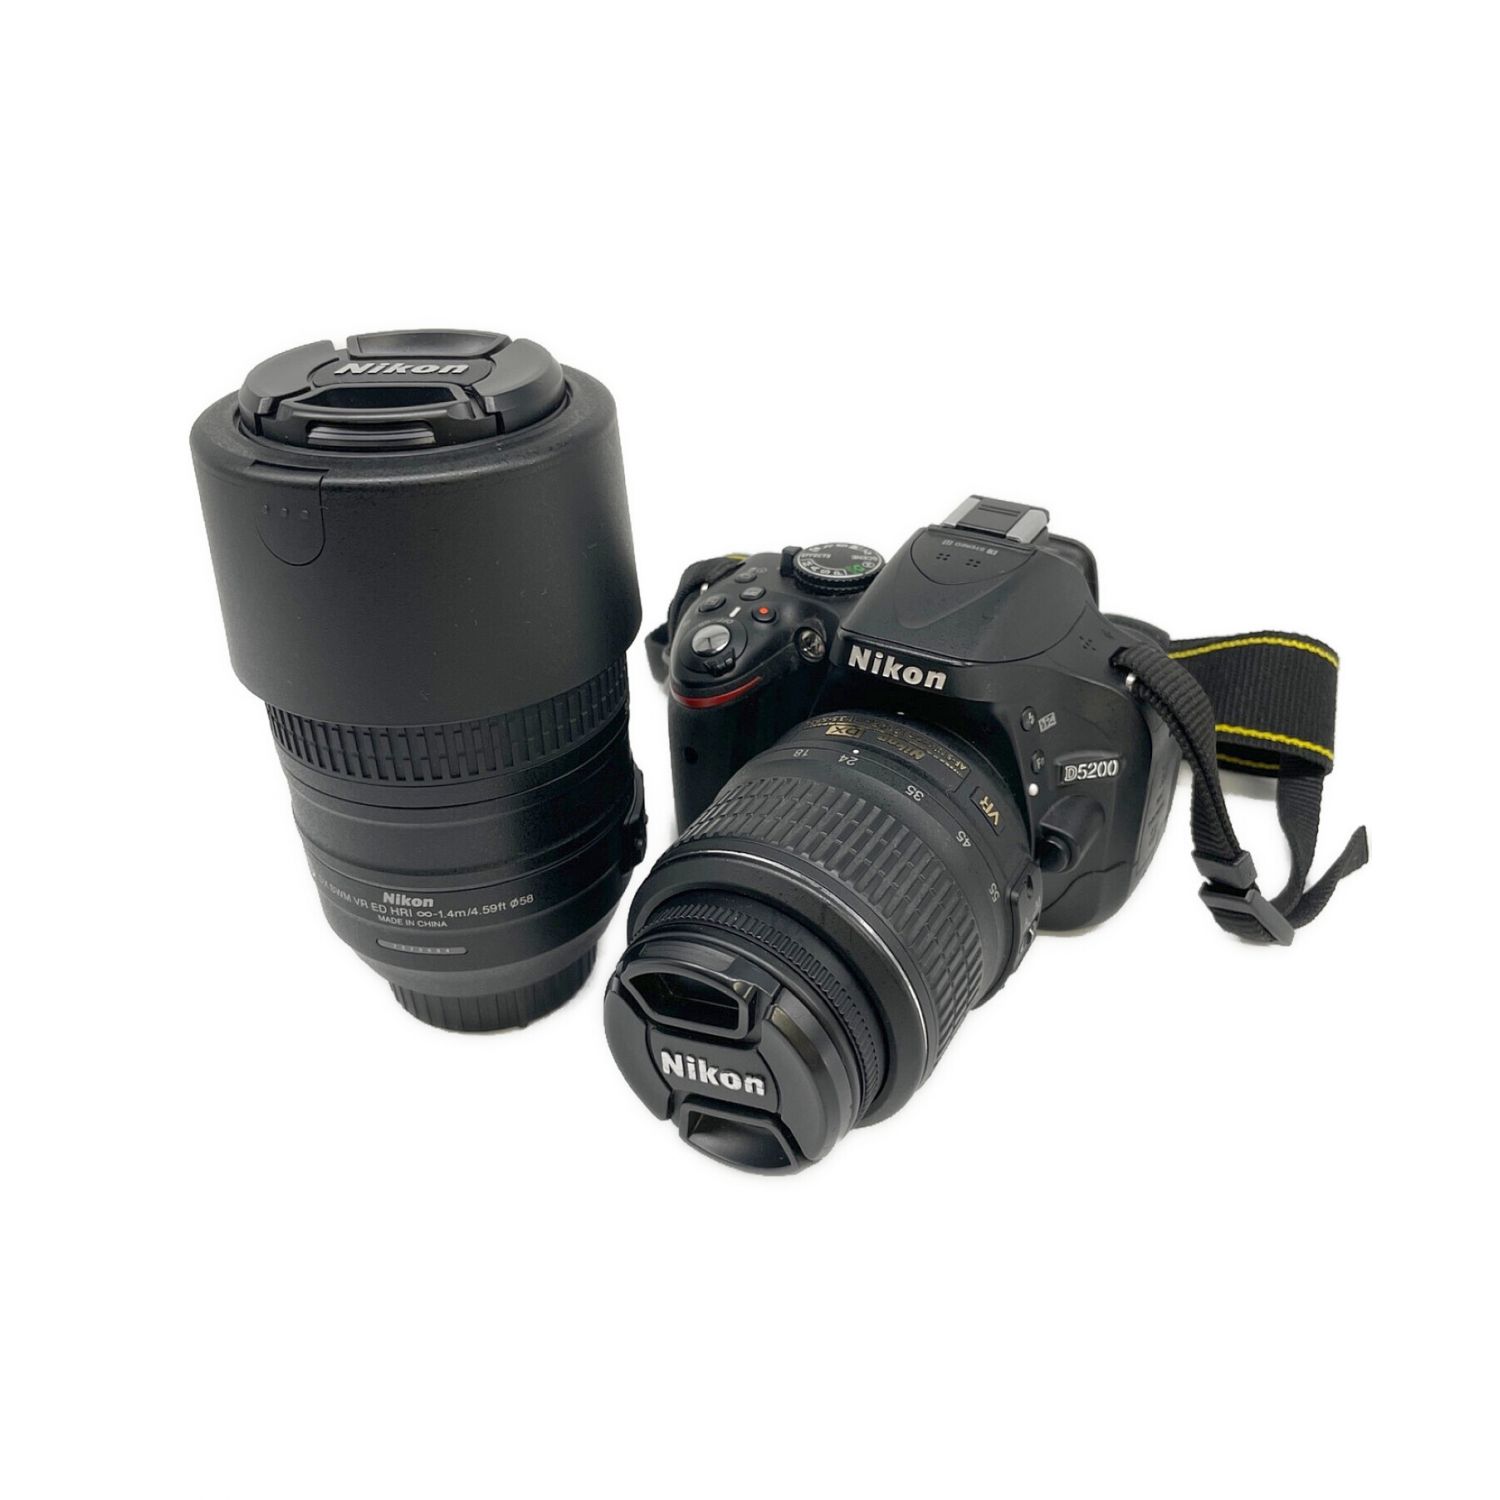 Nikon (ニコン) デジタル一眼レフカメラ AF-S 18-55mm F3.5-5.6G 